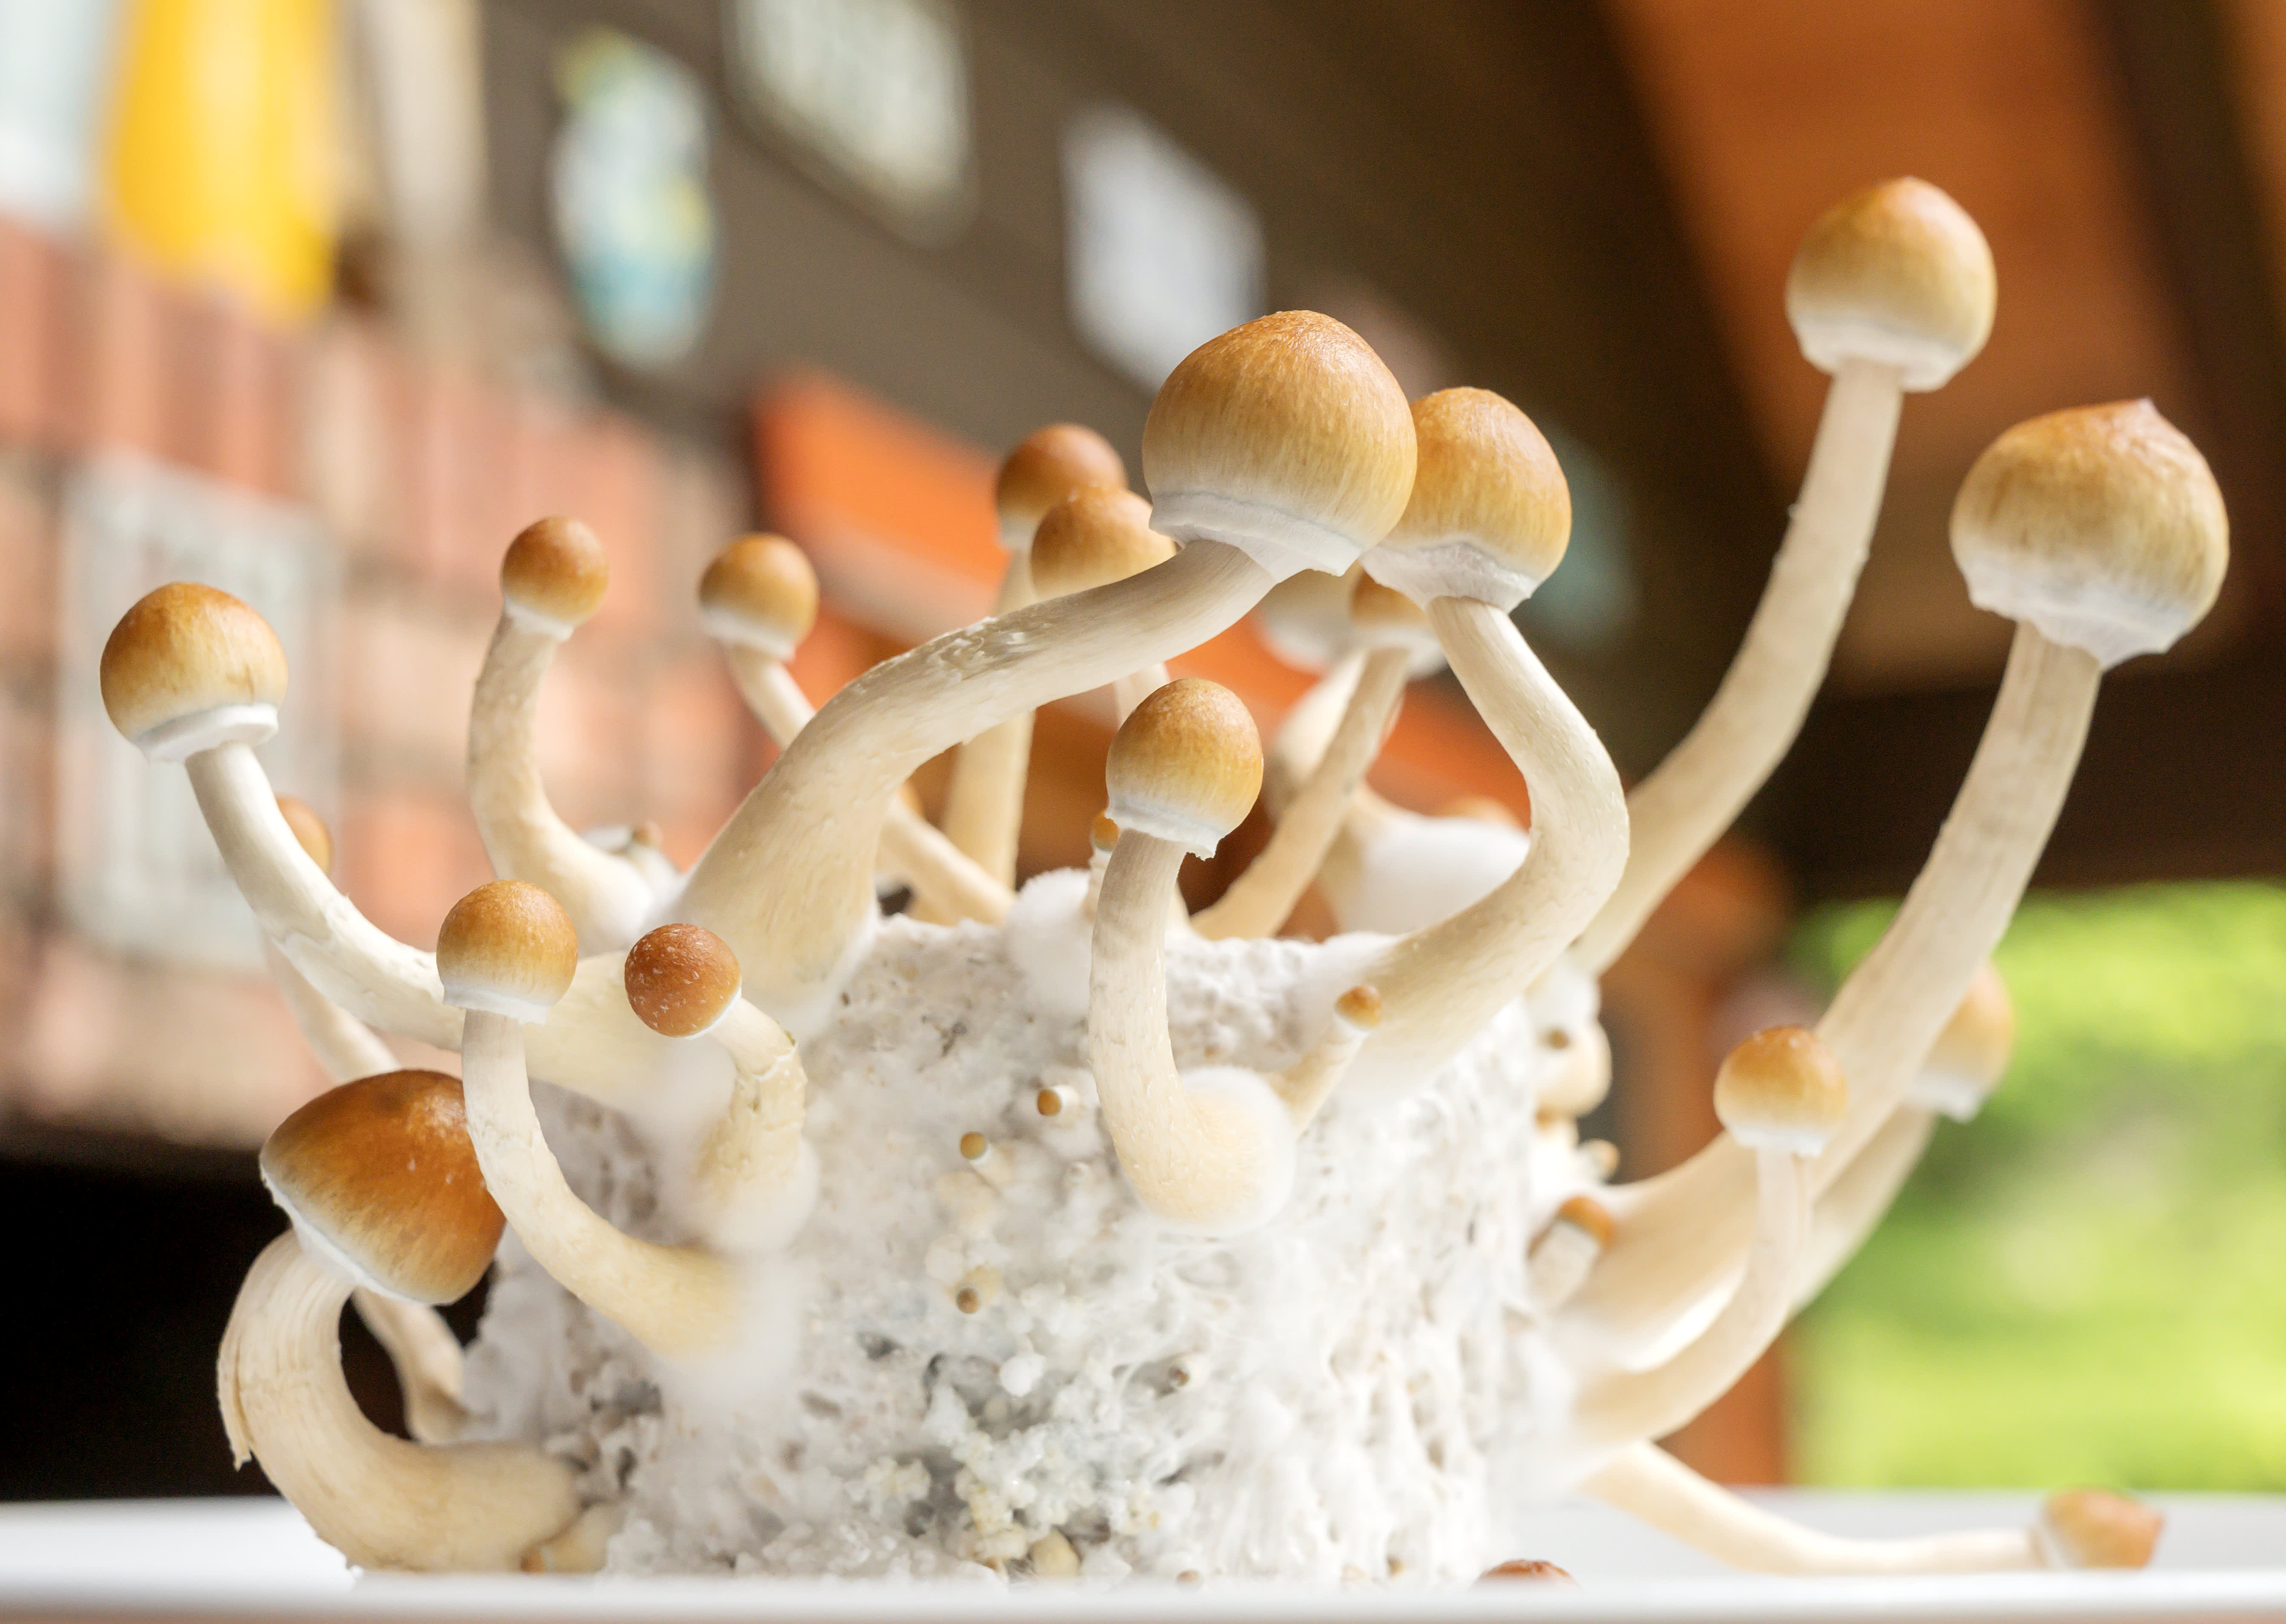 UC San Diego researchers caution against unregulated ‘magic mushrooms'